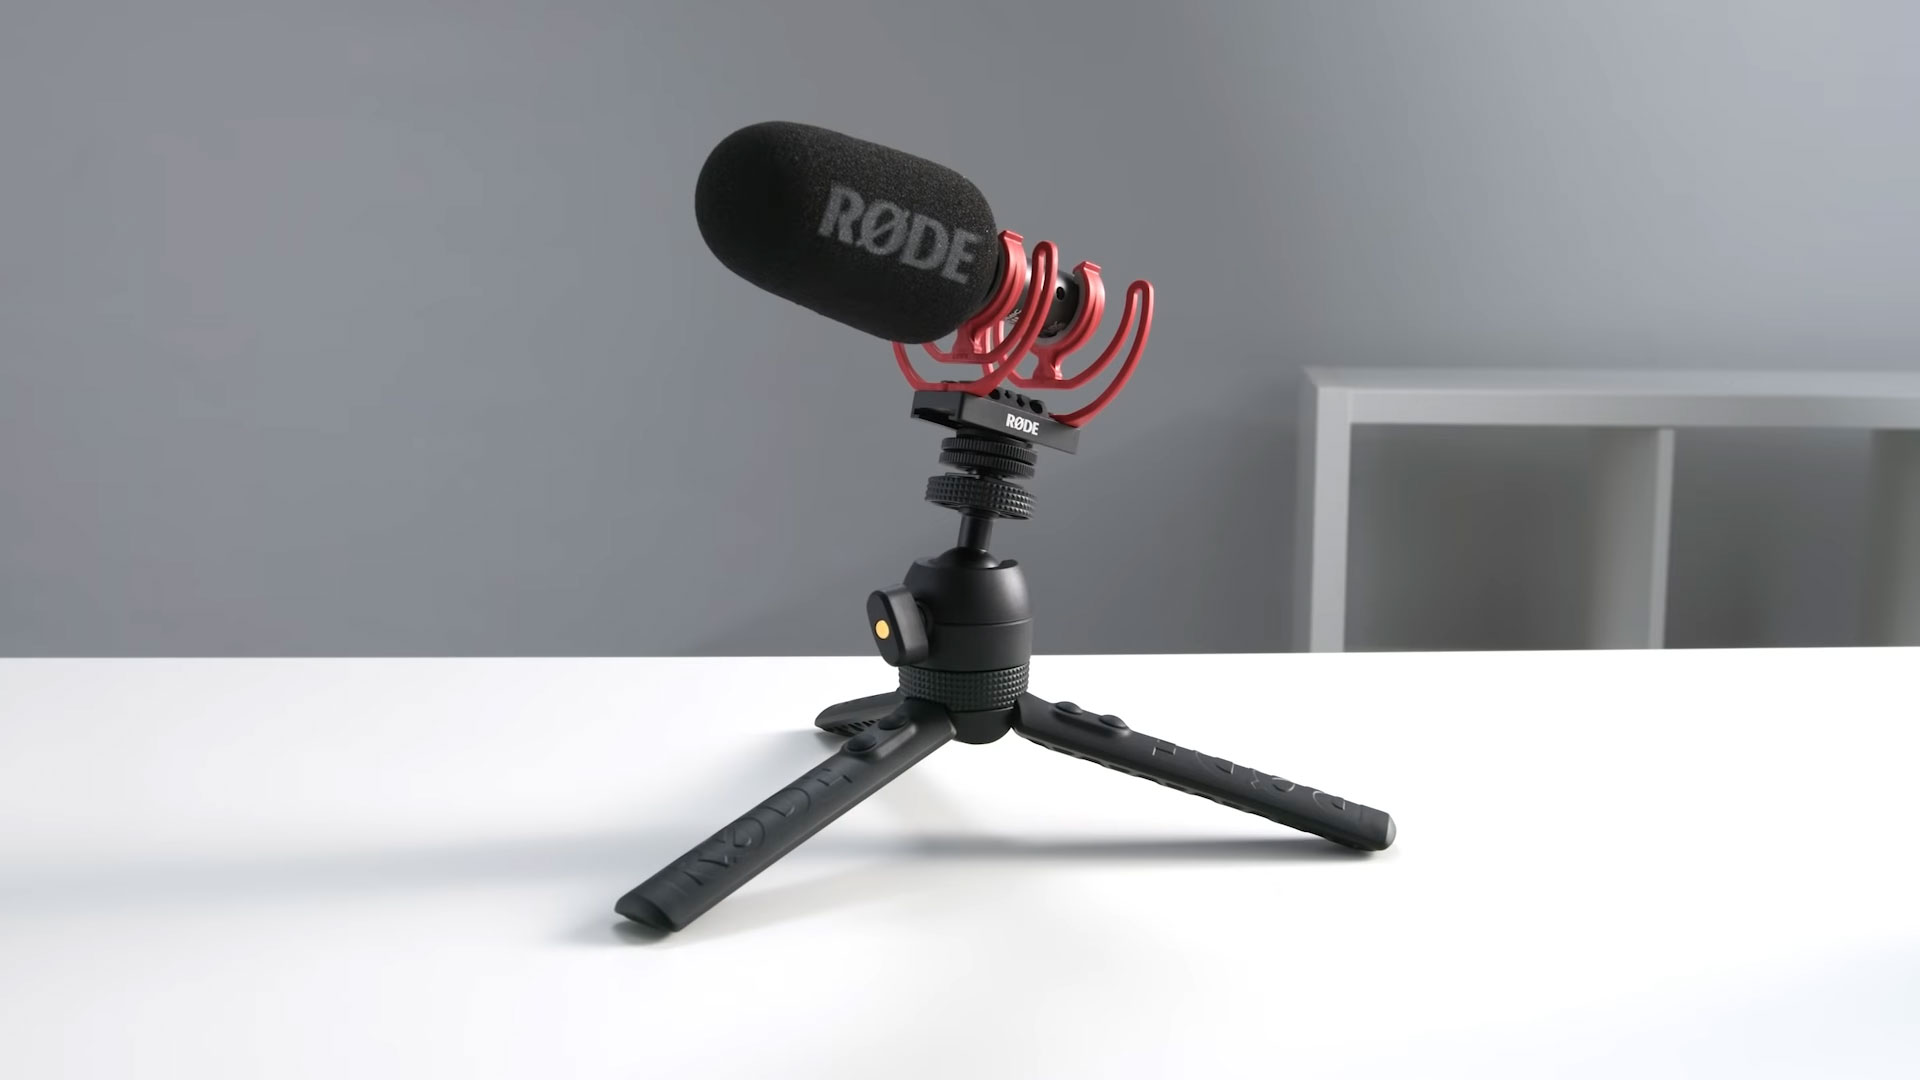 Rode VideoMic GO Microphone Compact